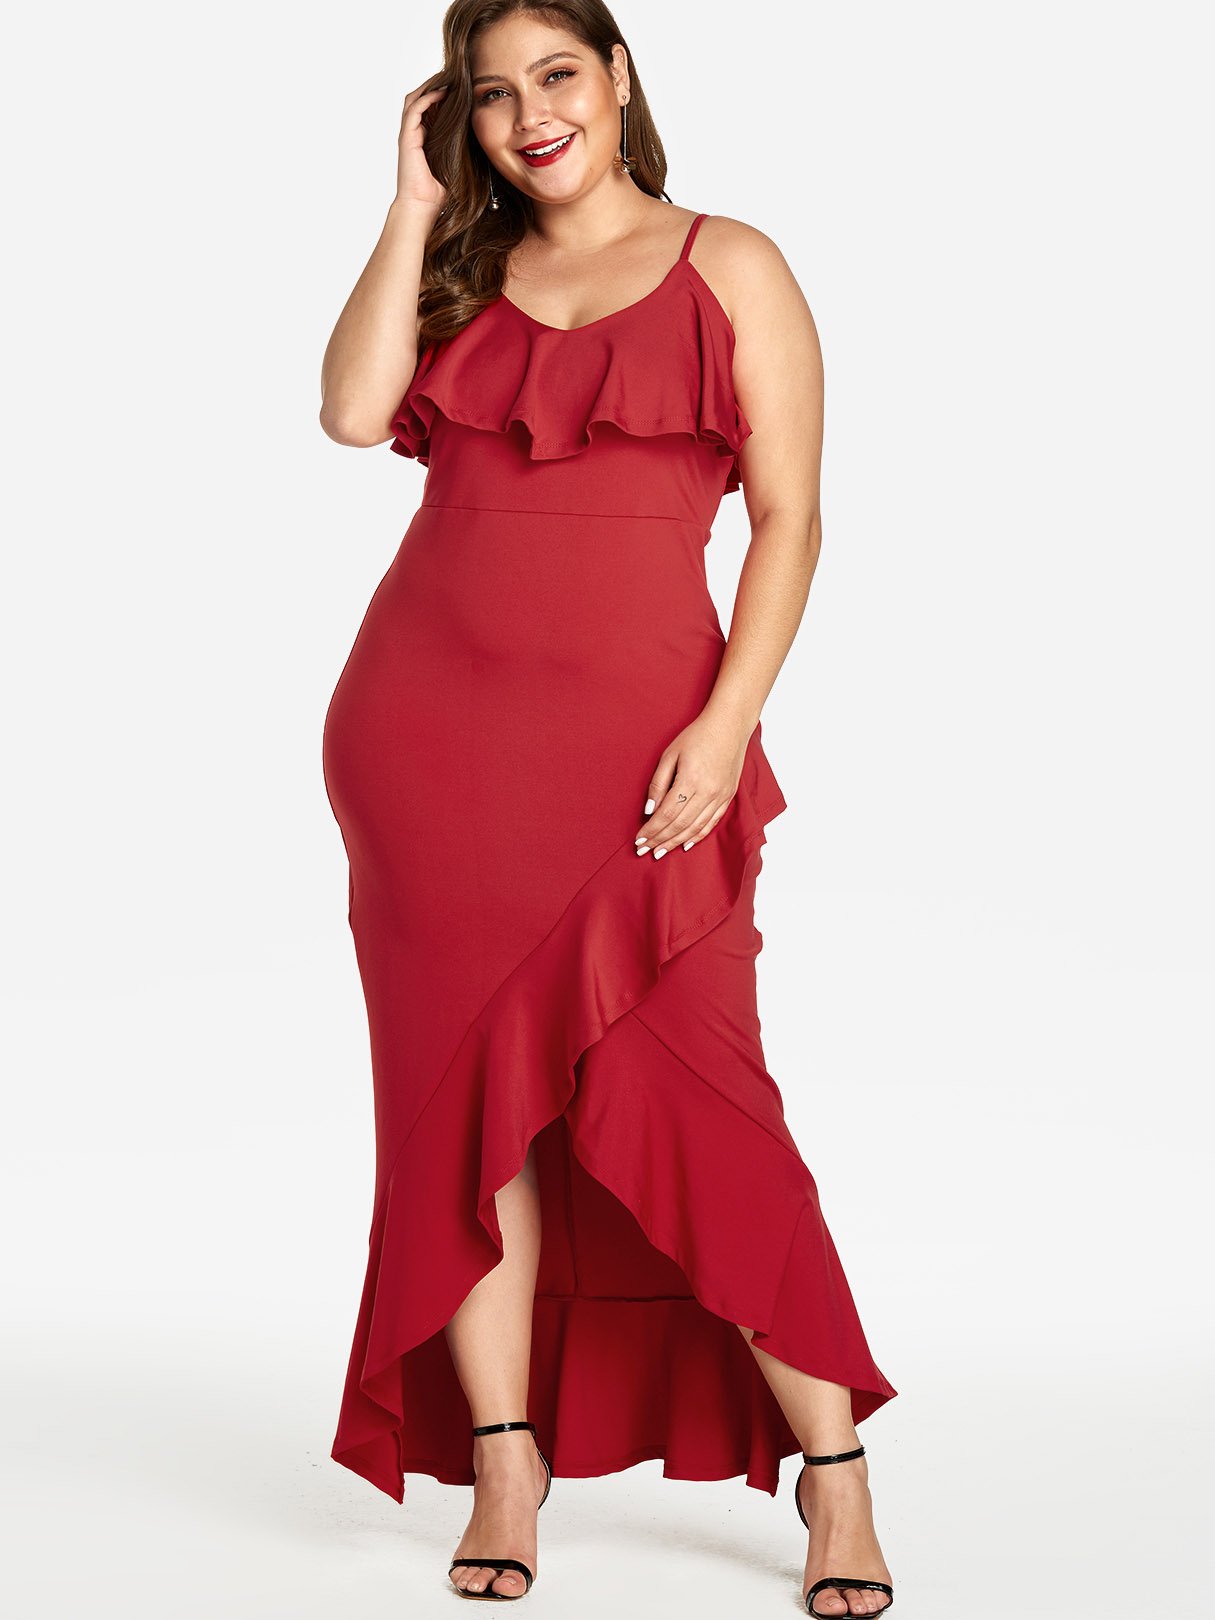 Wholesale Plain Tiered Ruffle Trim Sleeveless Red Plus Size Dress